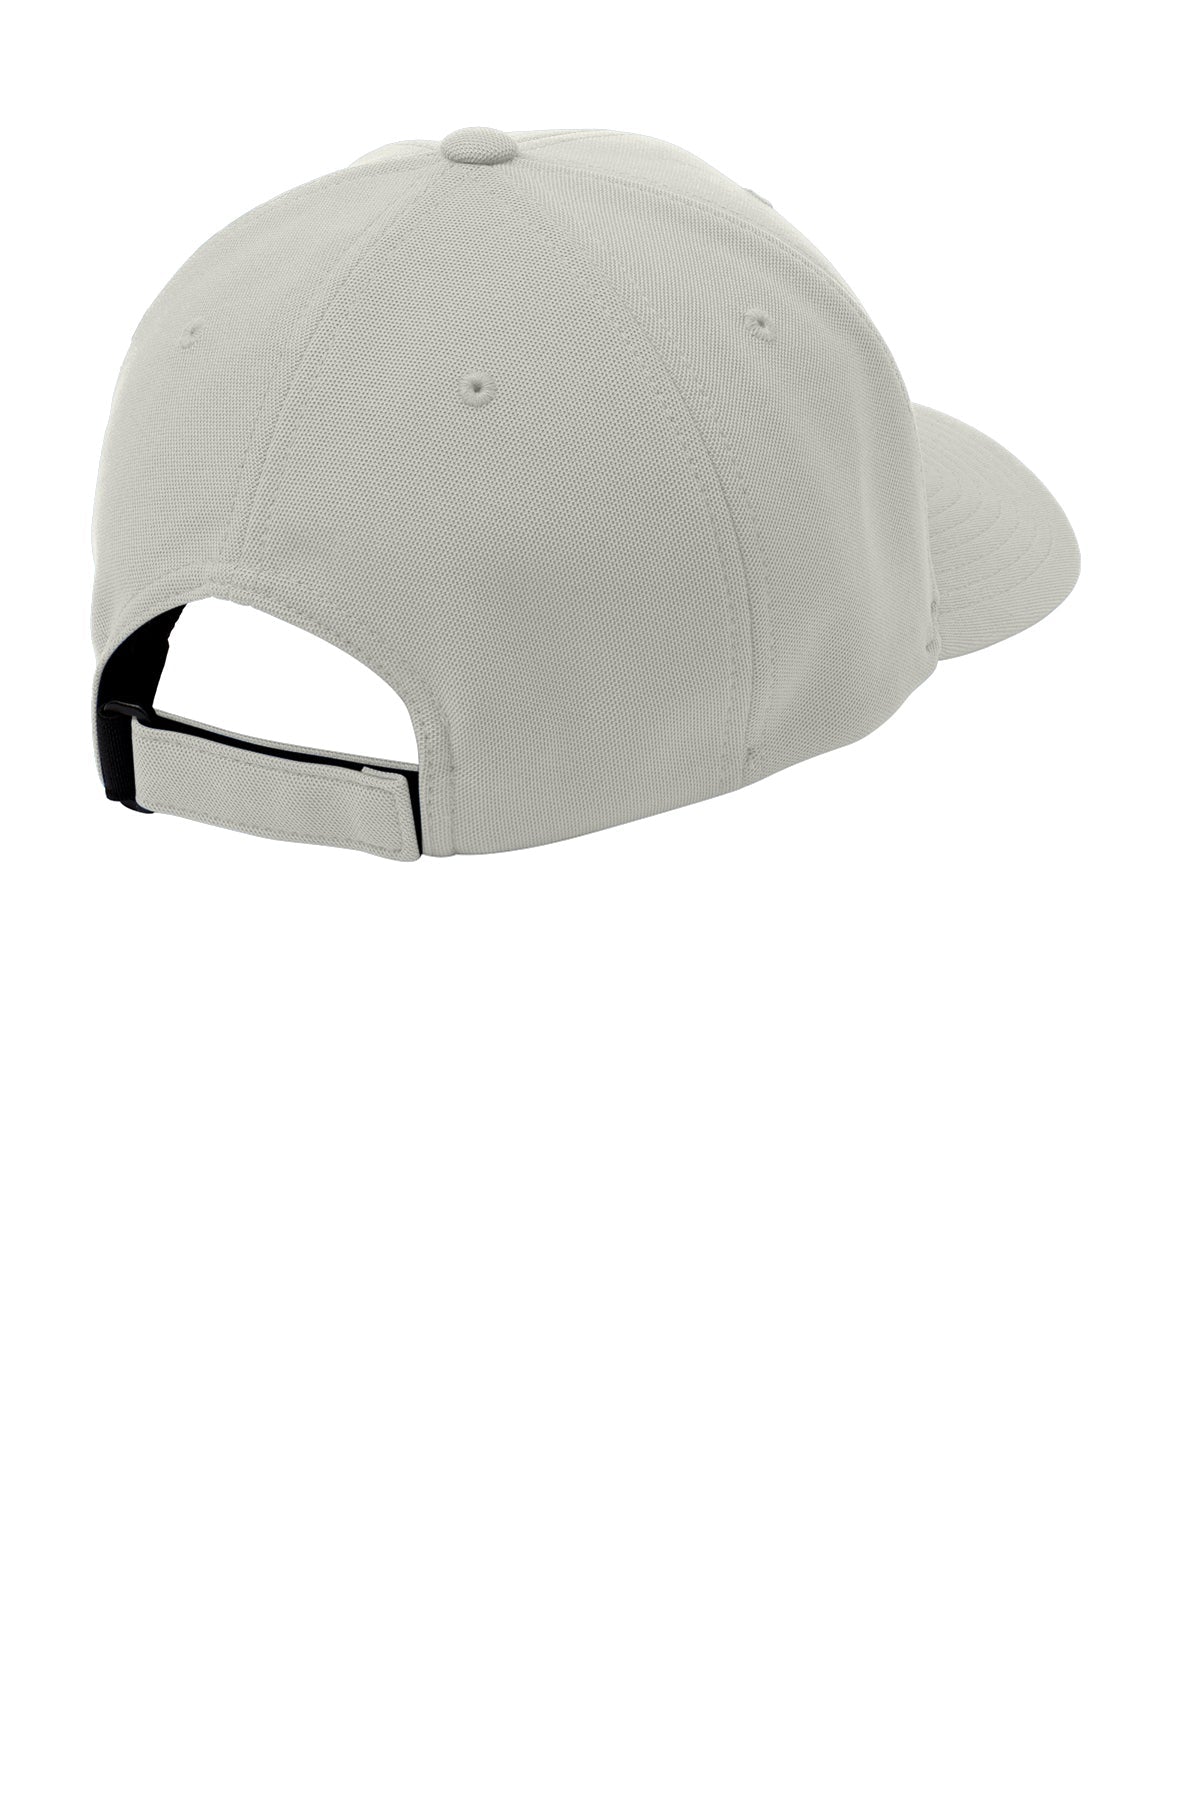 Port Authority Flexfit Custom One Ten Cool & Dry Mini Pique Caps, Silver